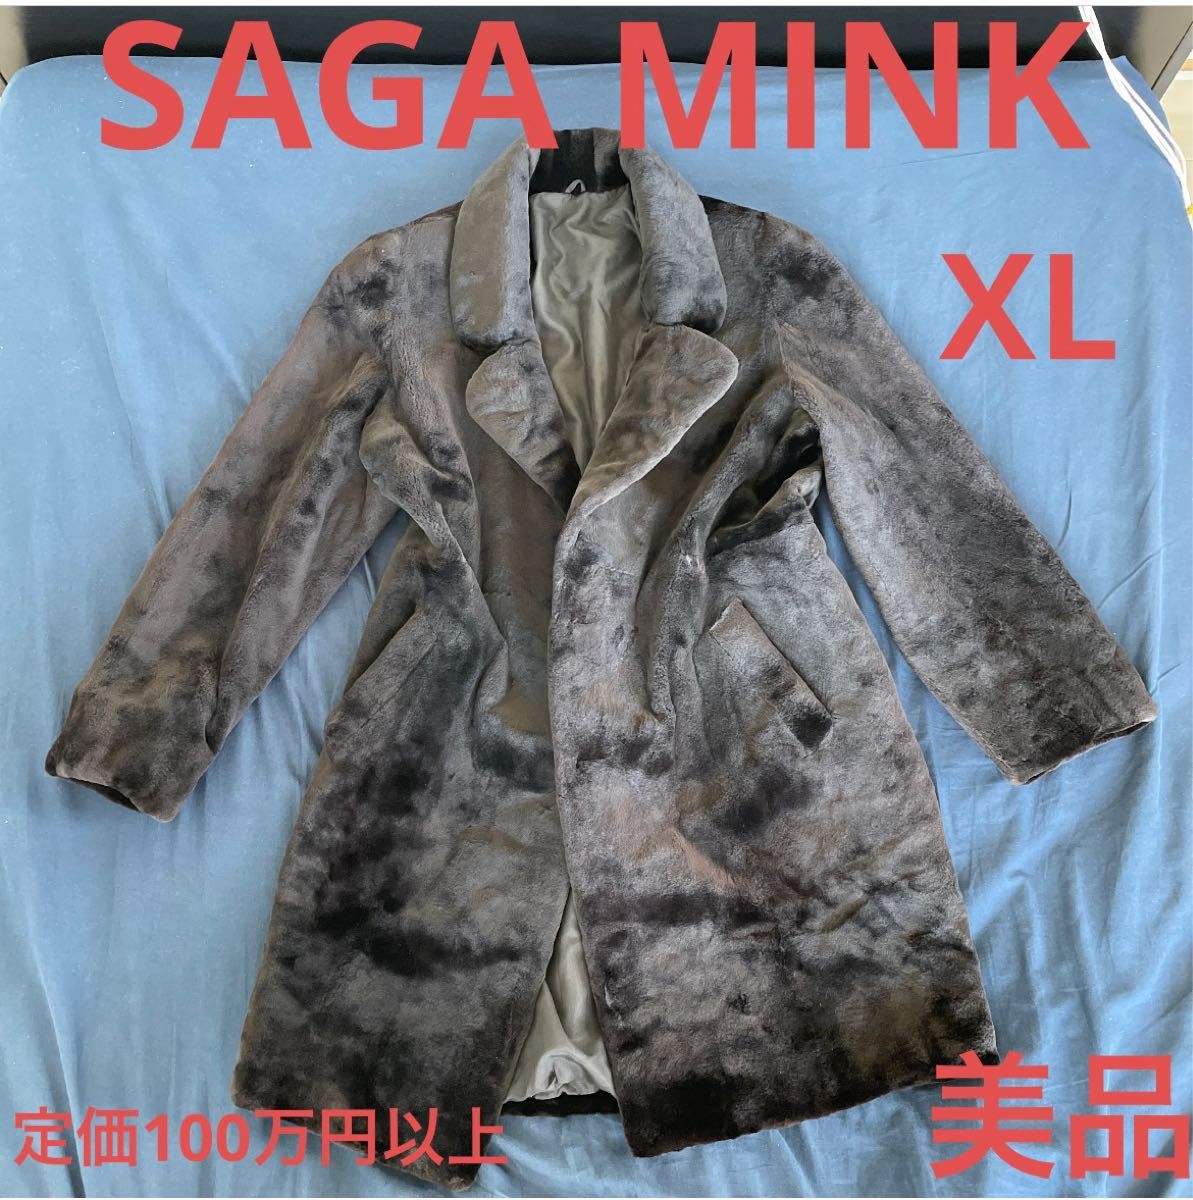 SAGA MINK サガミンク シェアードミンクロングコートXL 定価100万円